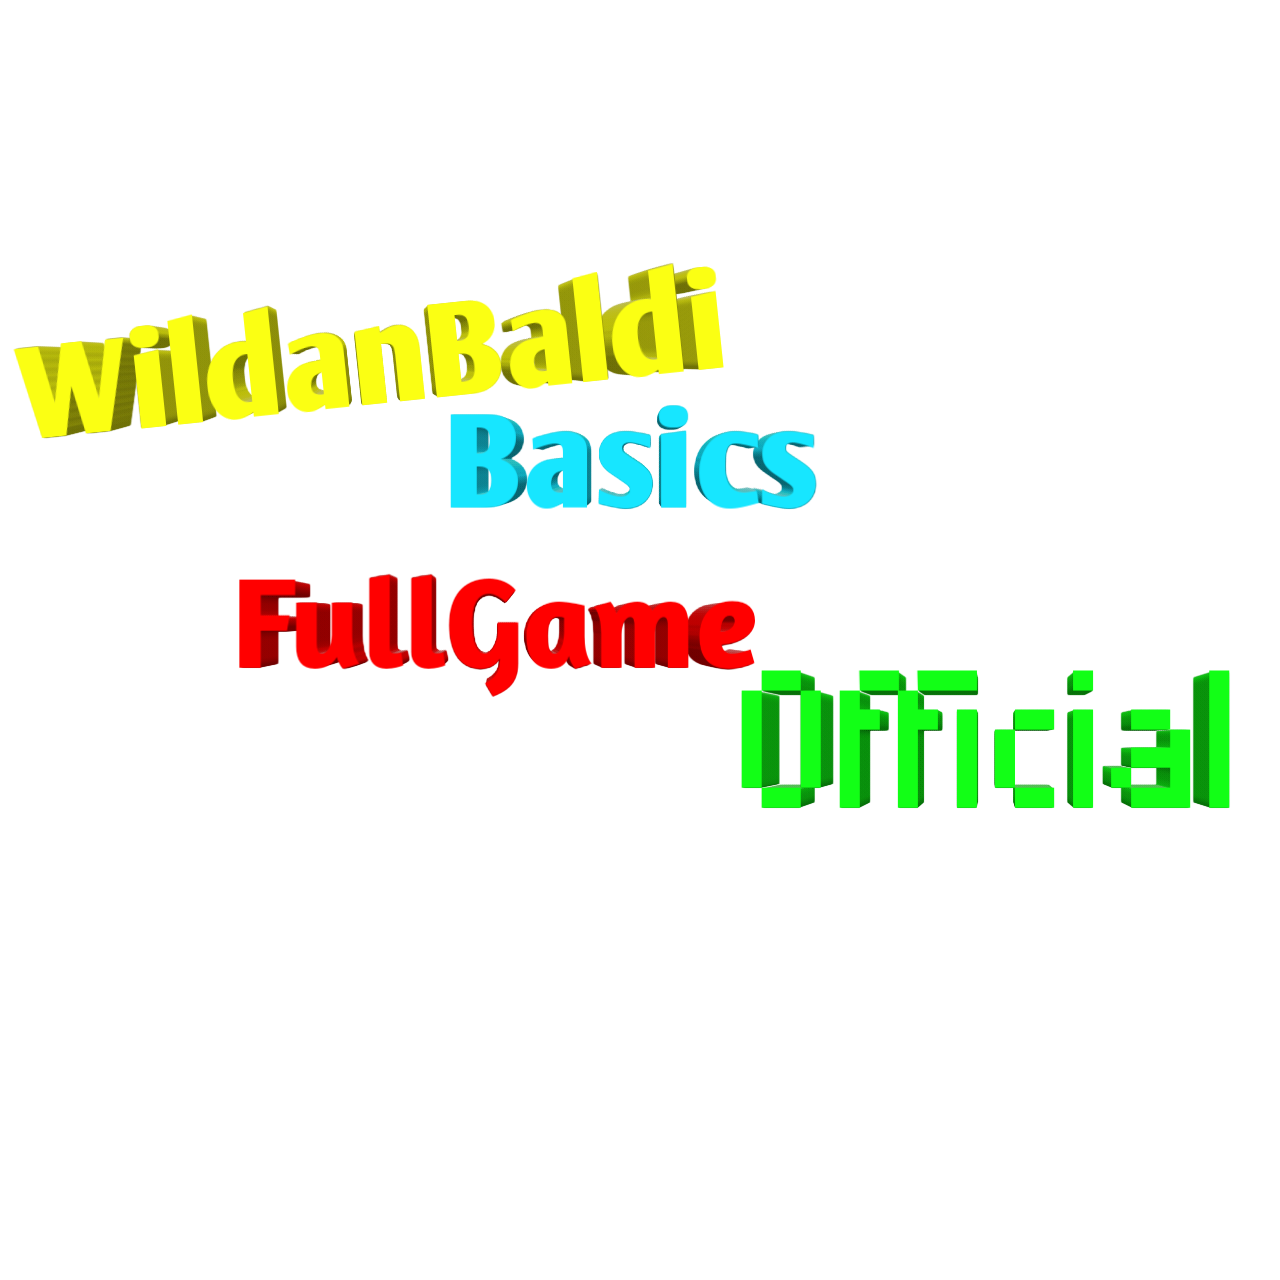 WildanBaldi Basics Full Game Official